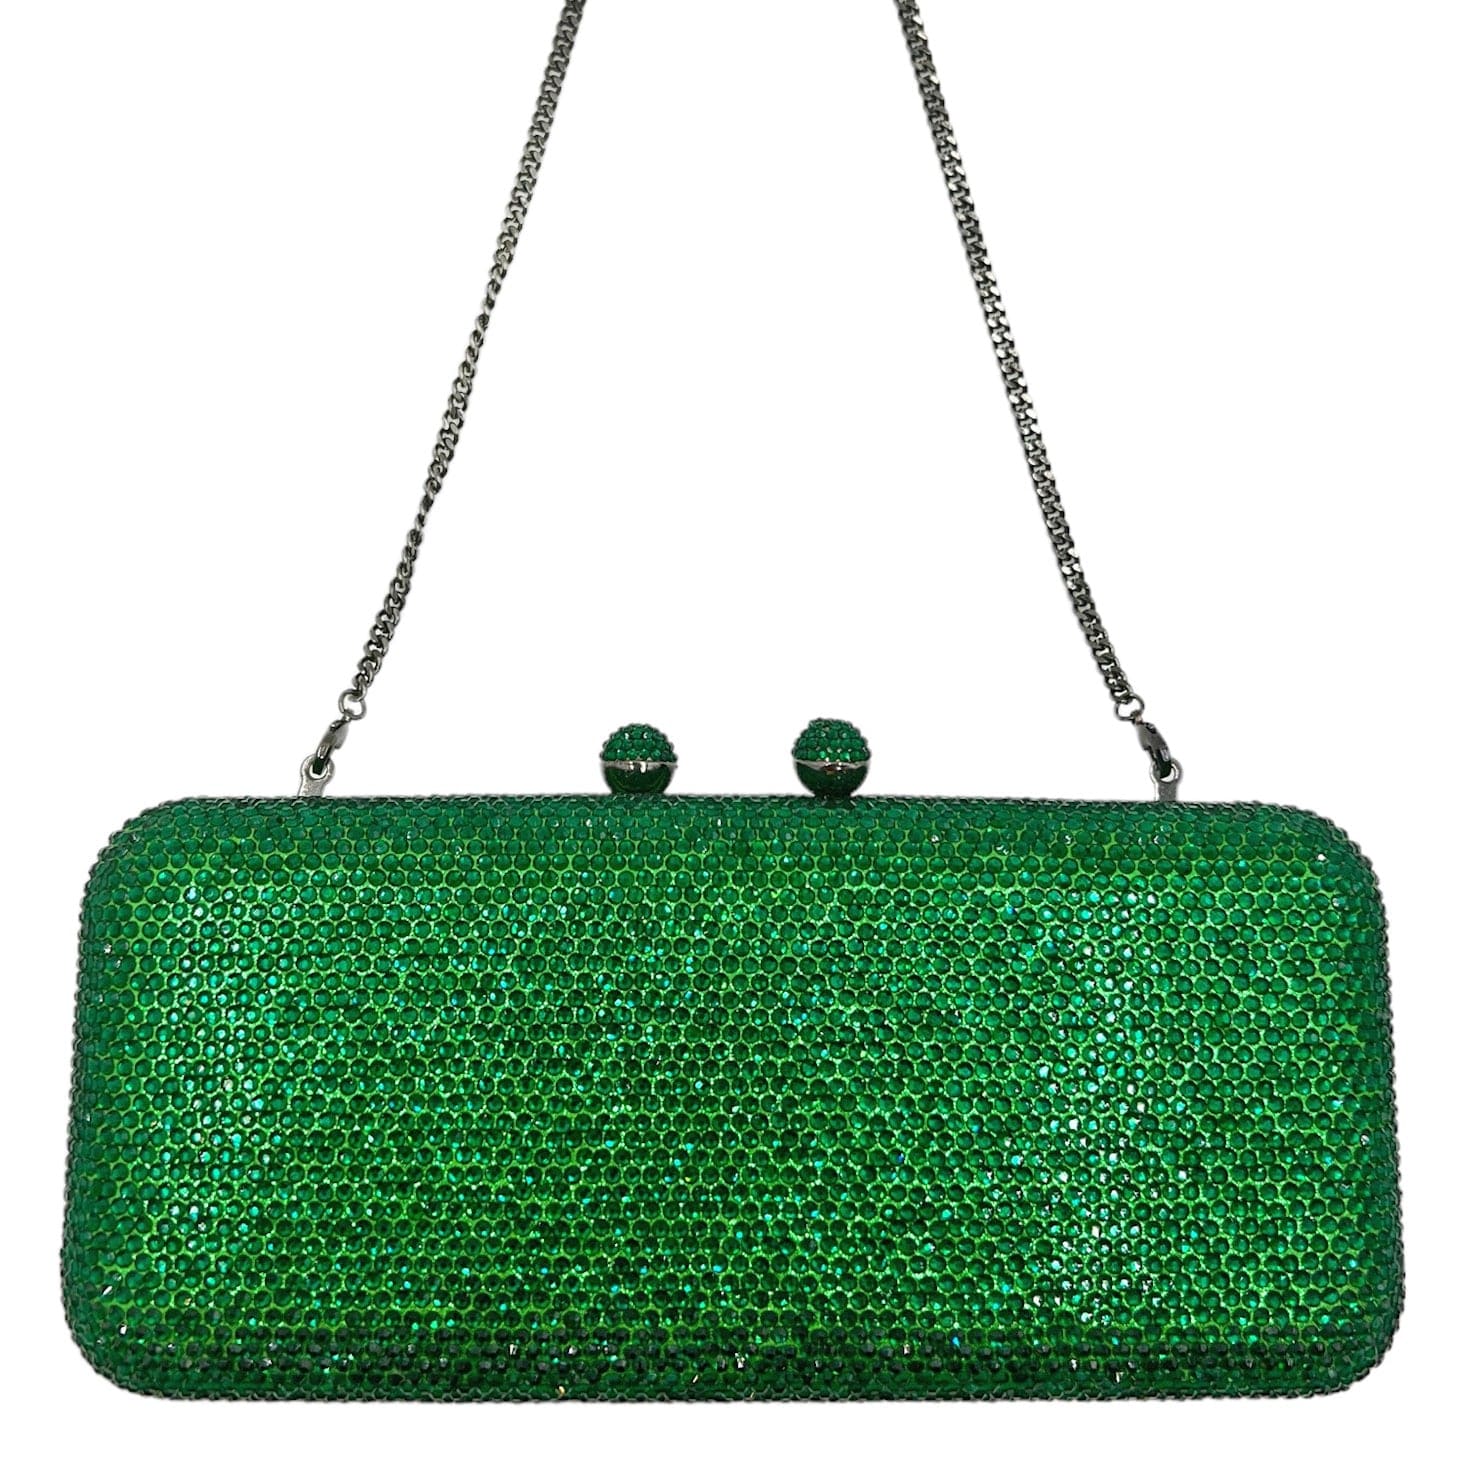 Handbag Rhinestone Convertible Clutch Evening Bag - Emerald Green New w/out Tags